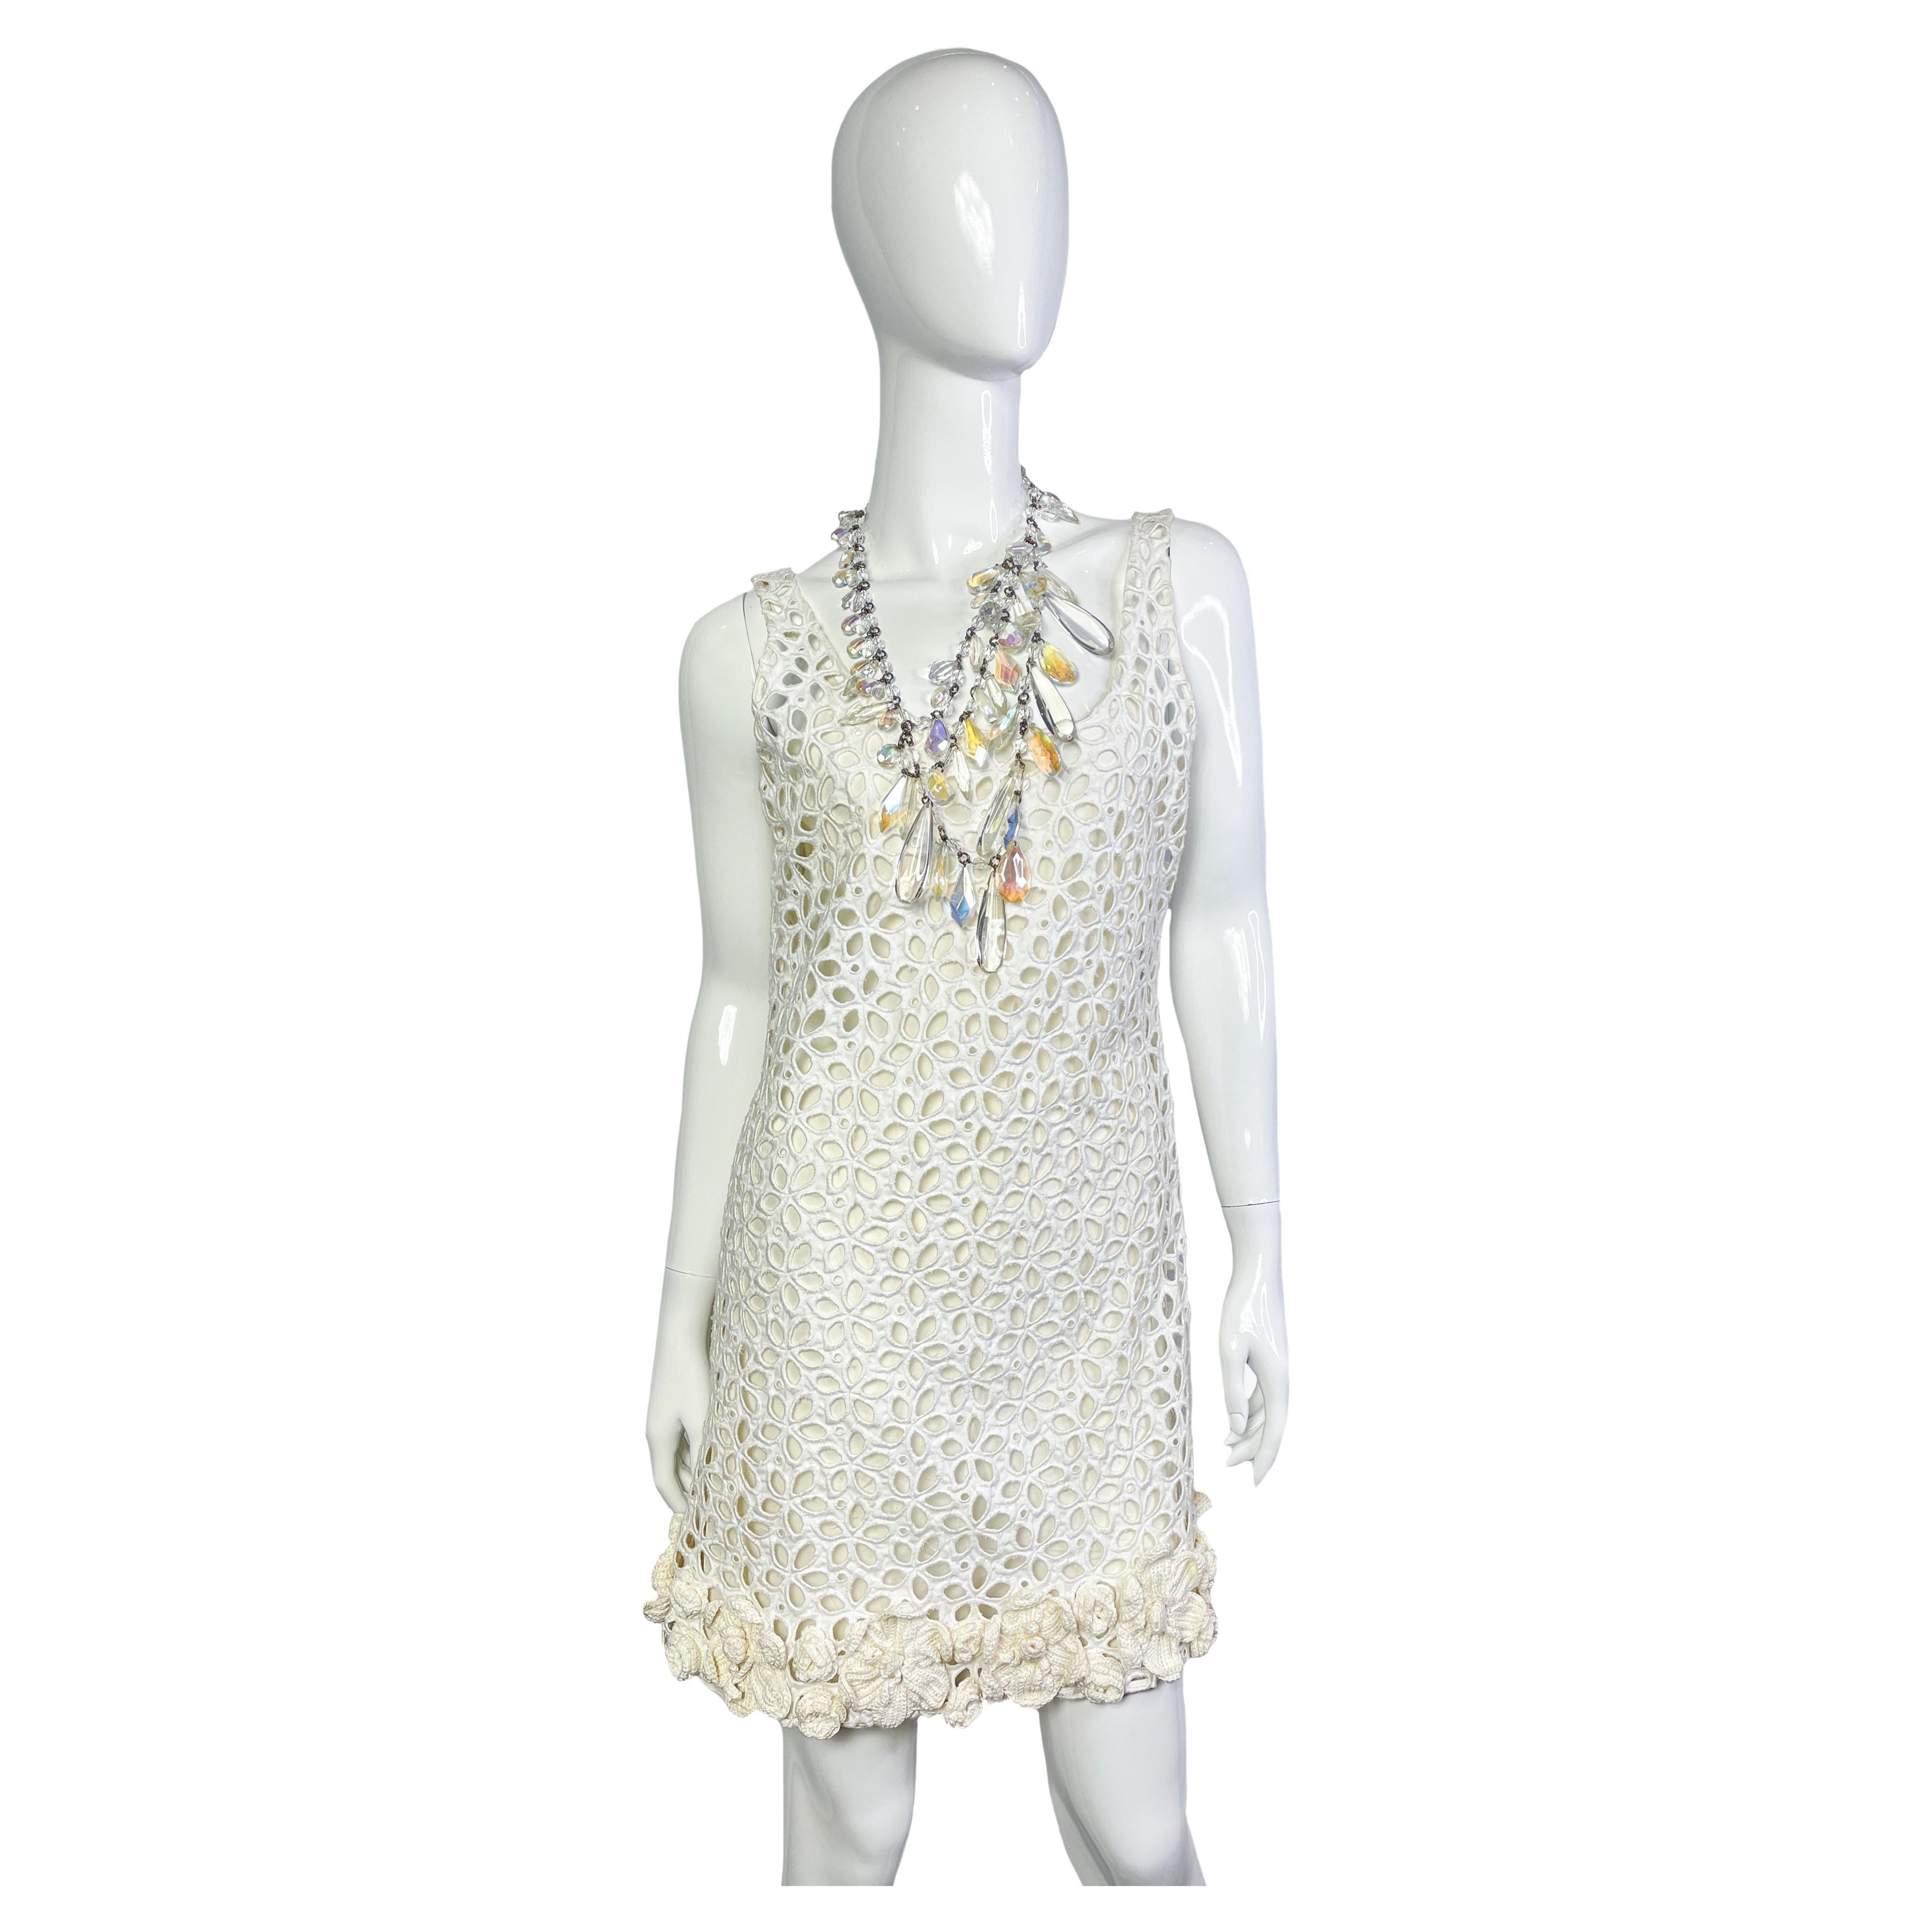 Prada Off-White Crochet Mini Dress with Crystal Necklace, 2014 